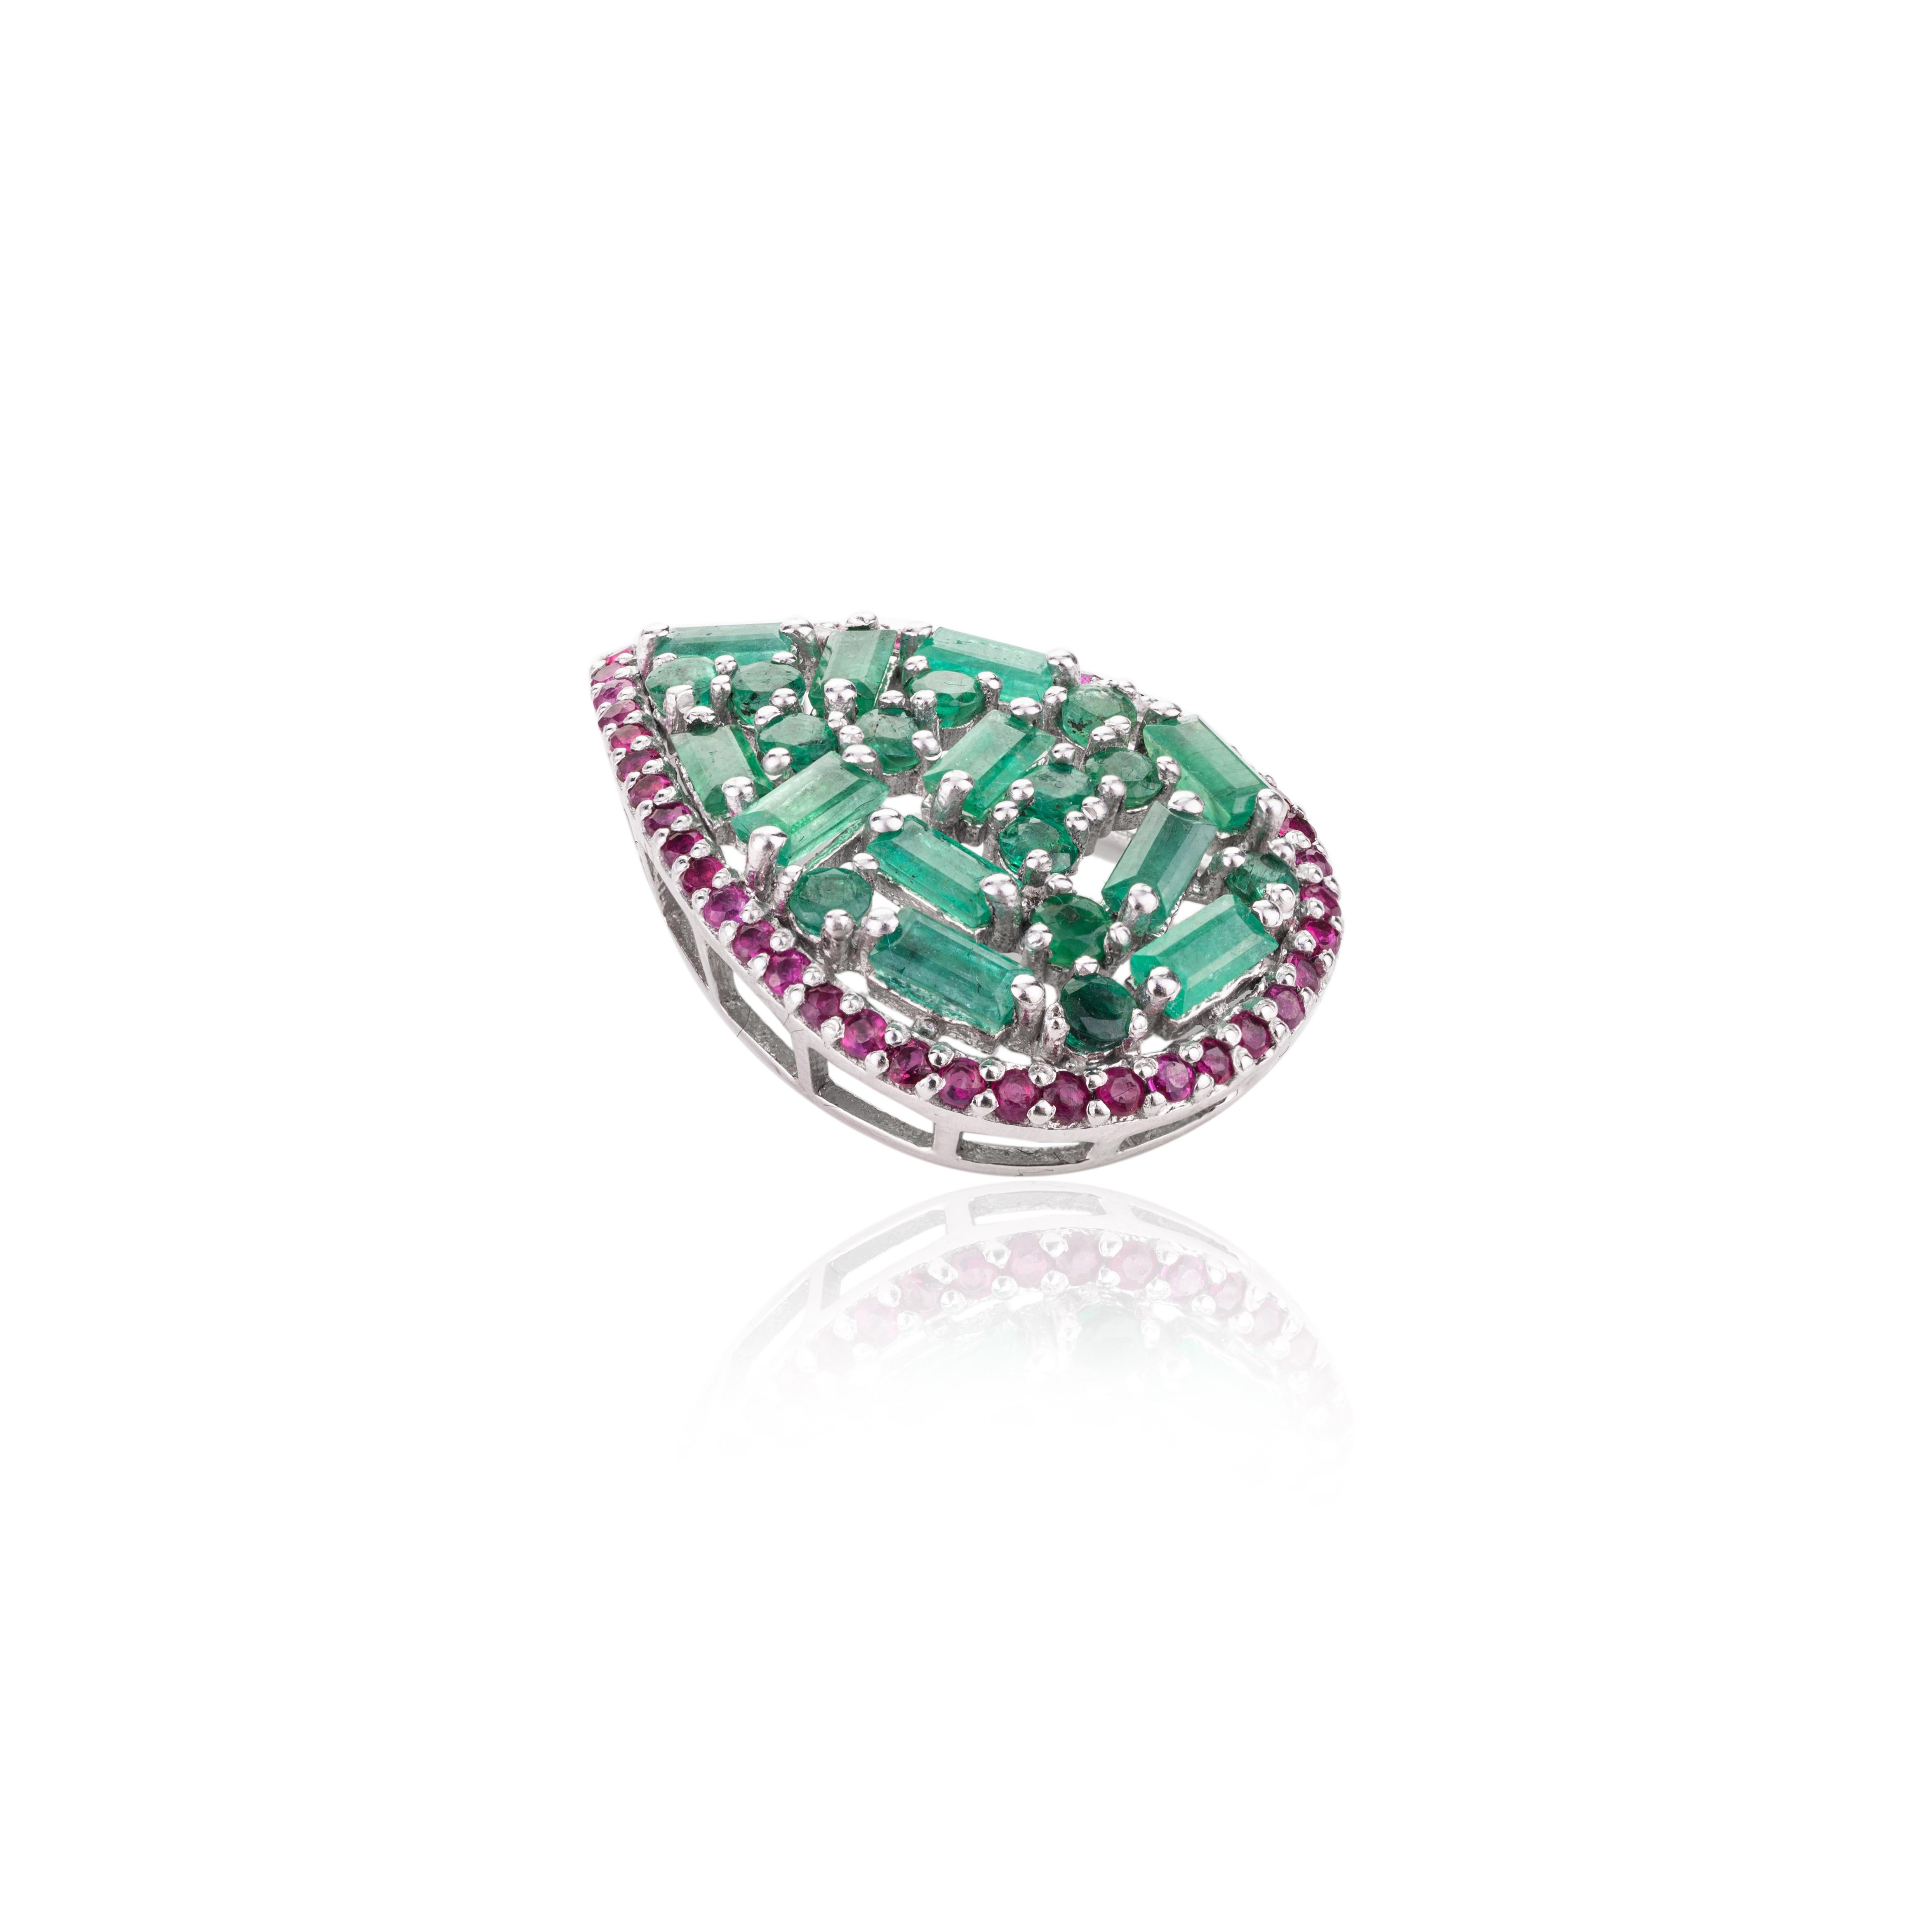 Women's or Men's Statement Emerald Ruby Cluster Brooch Pin in Sterling Silver